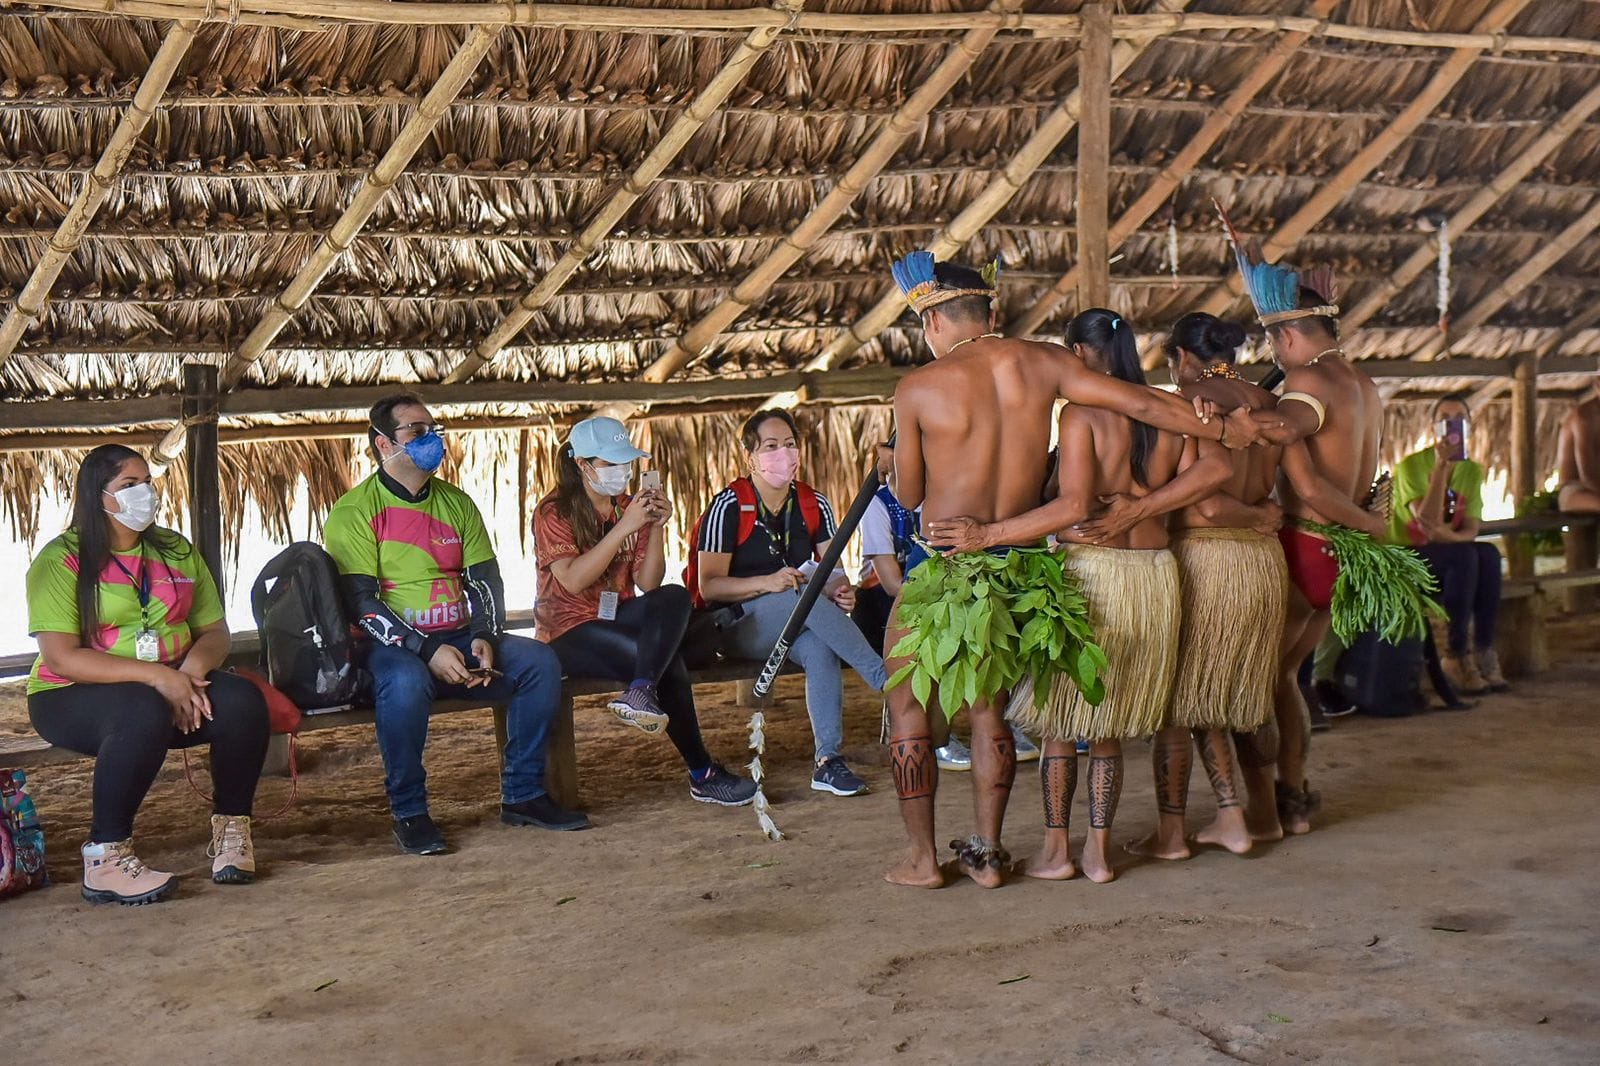 Comunidades indígenas vão ganhar Plano de Ordenamento Turístico da Amazonastur